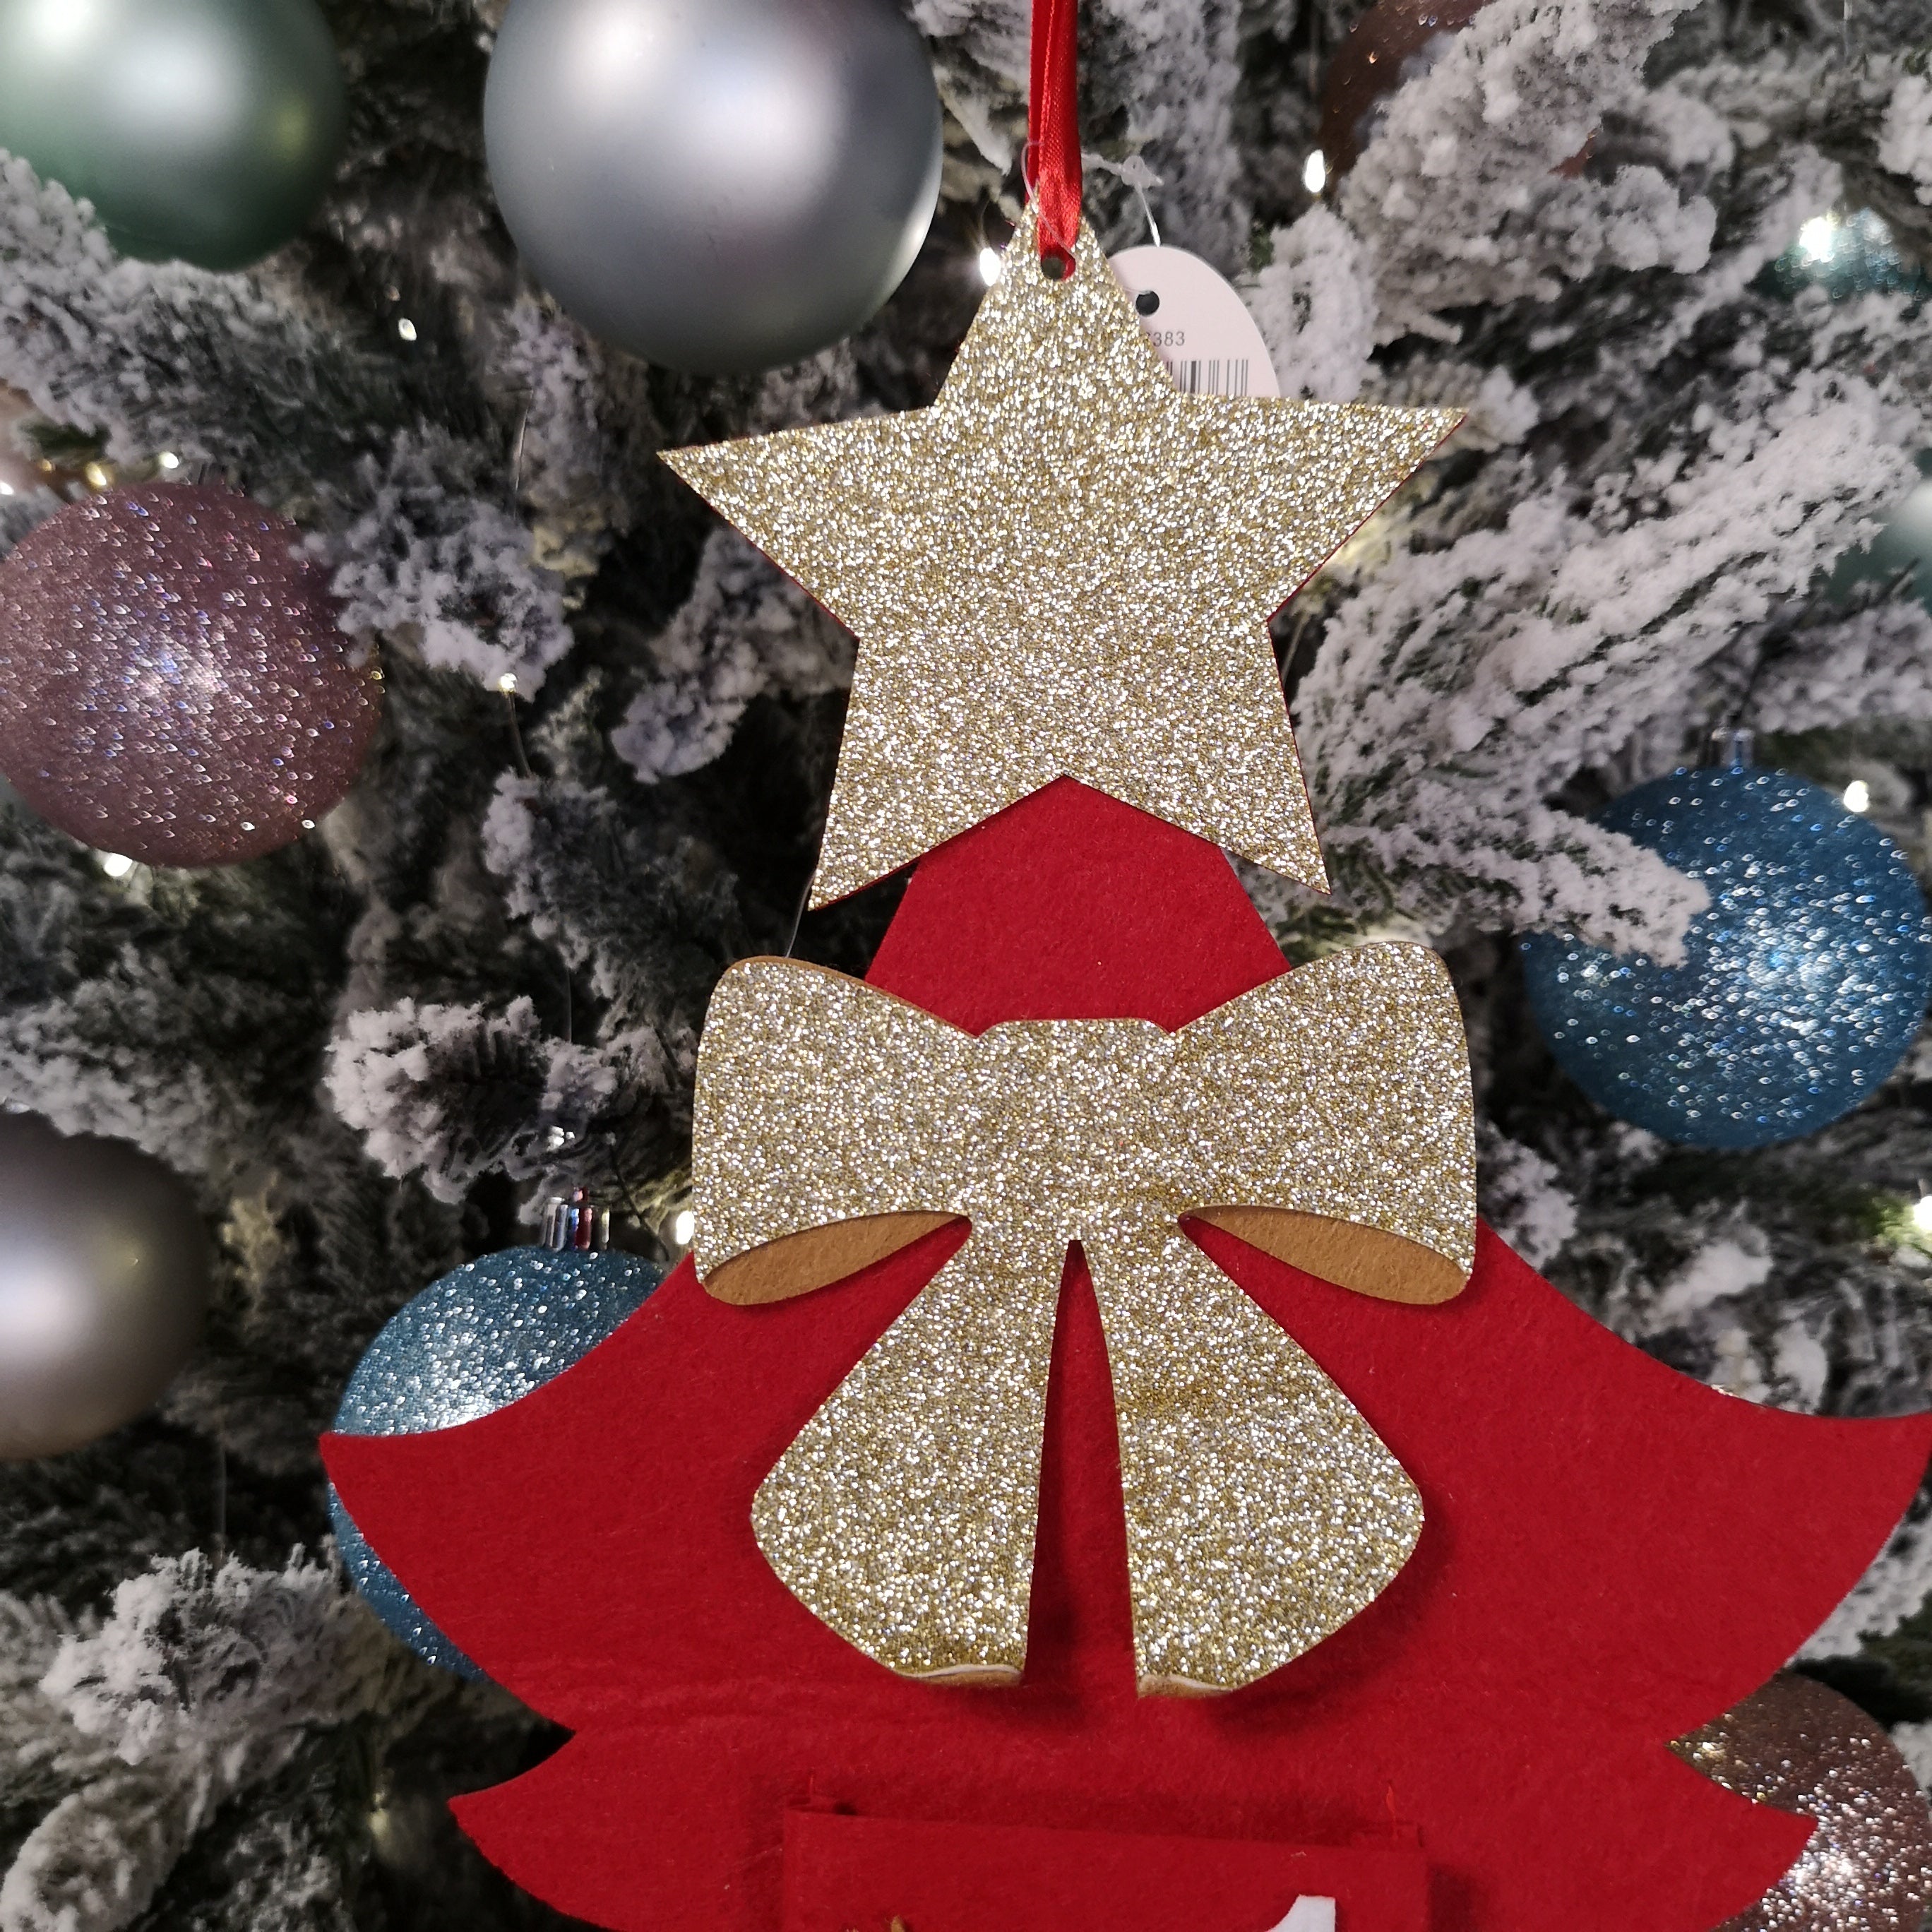 90cm Fabric Tree Shape Advent Calendar Christmas Decoration in Red